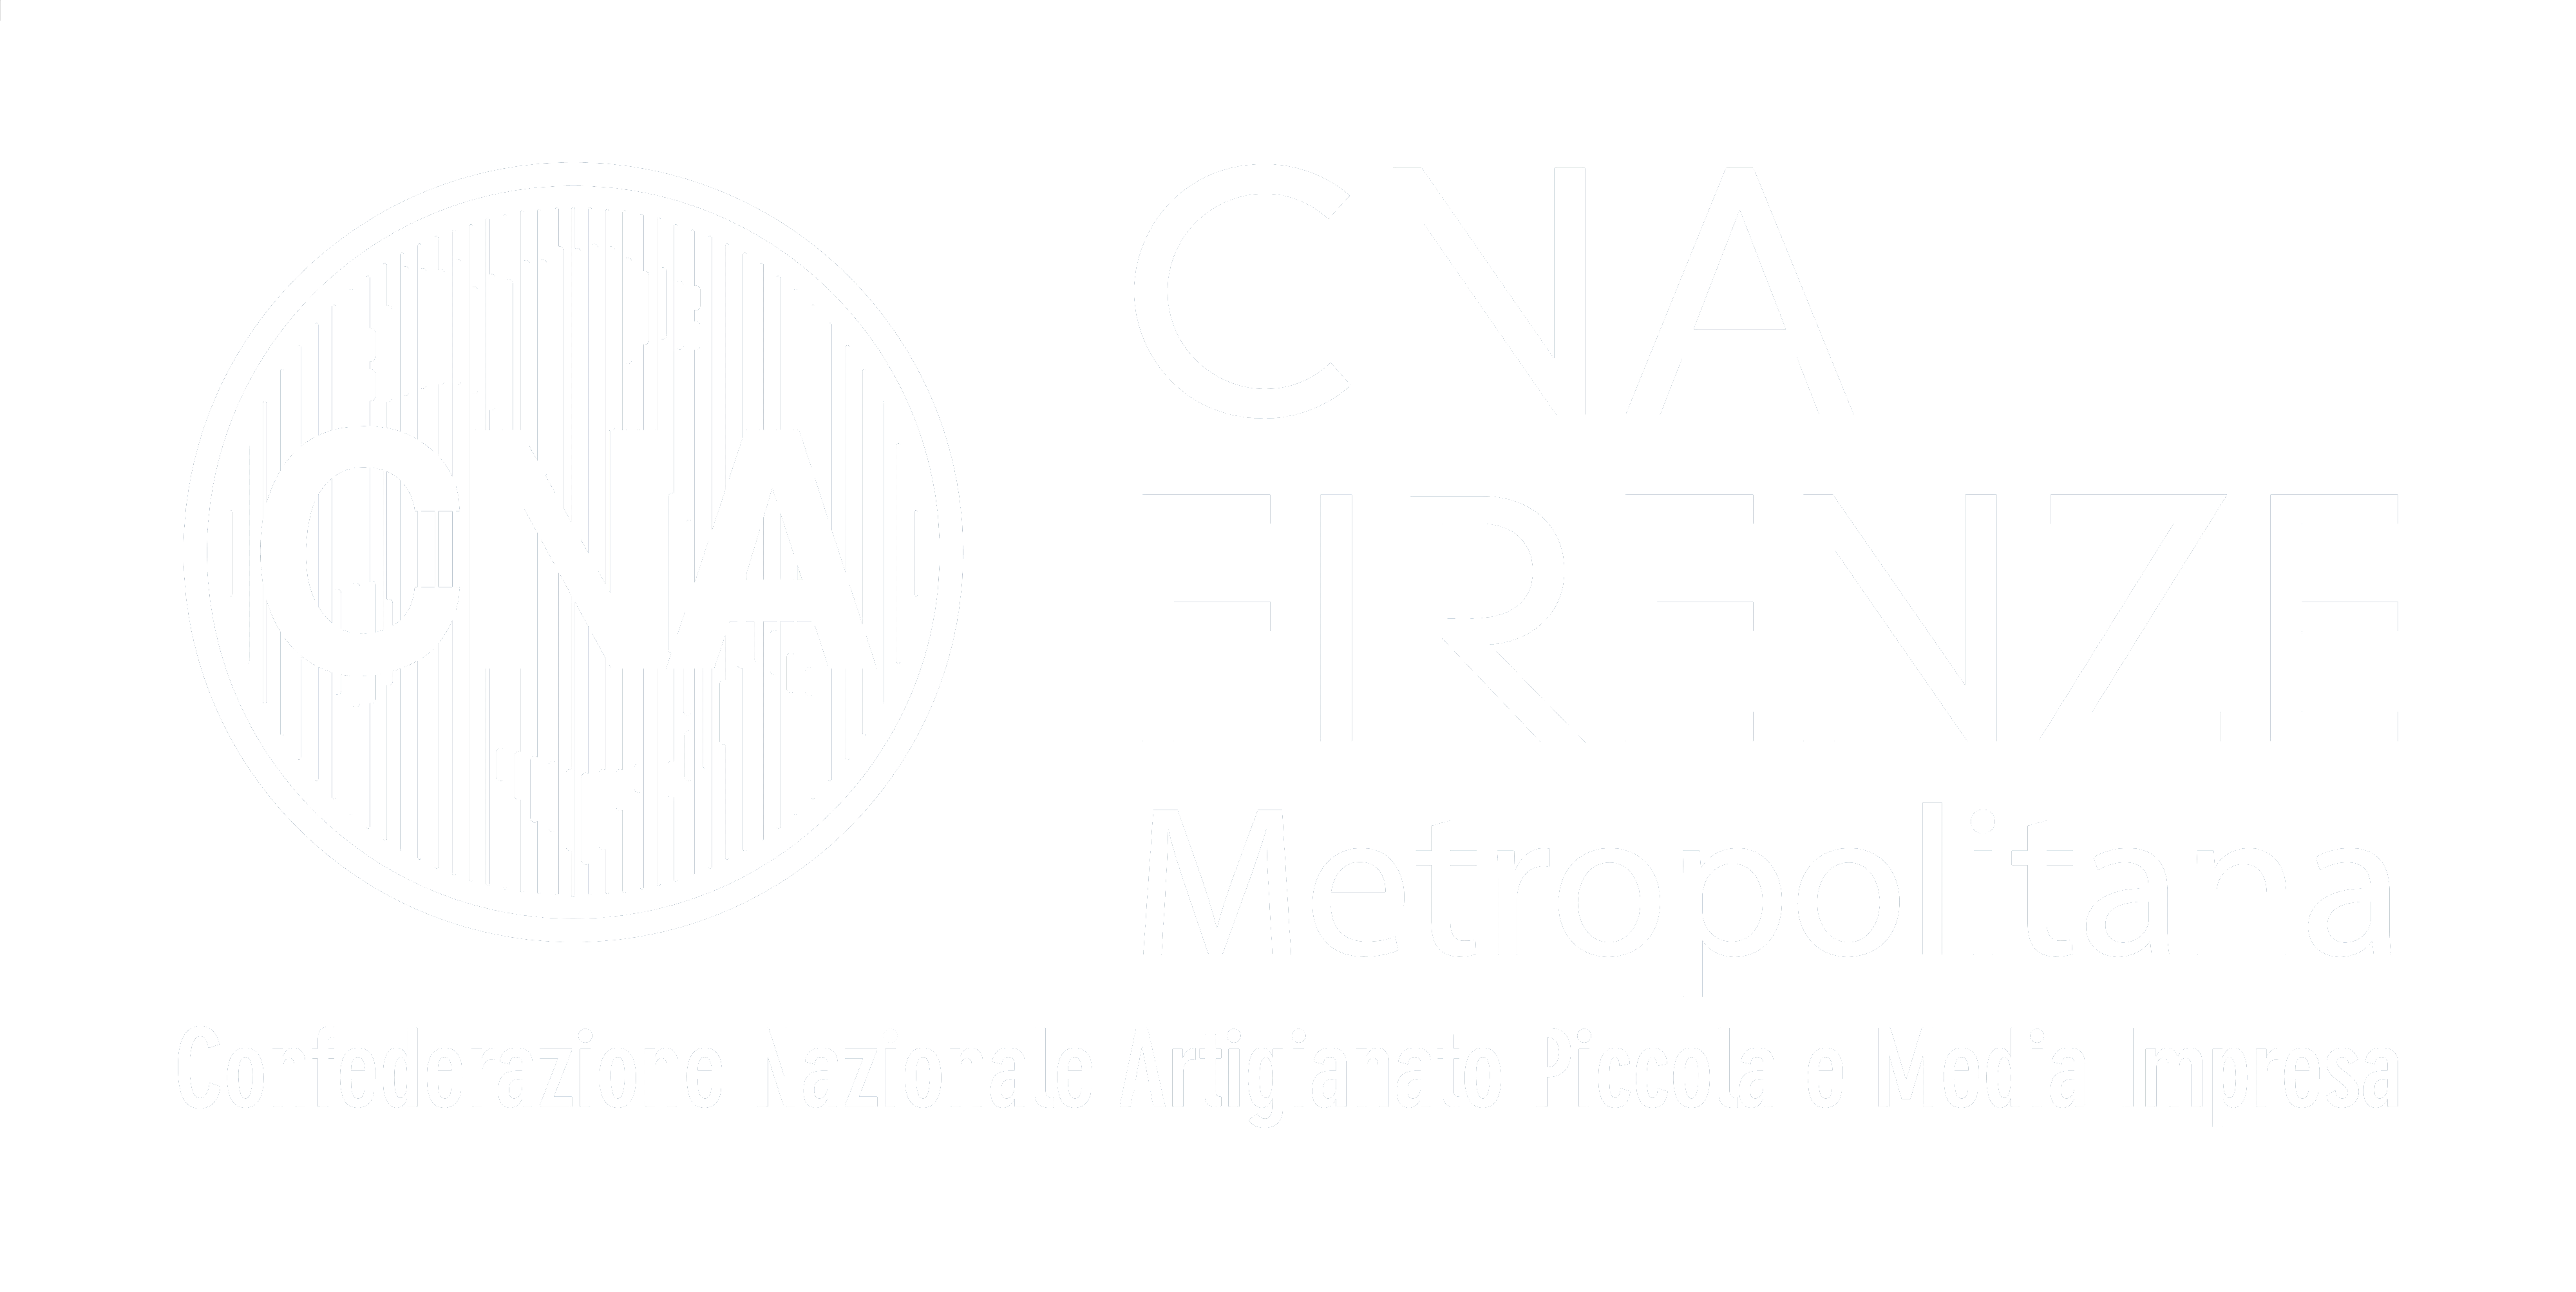 CNA Firenze Metropolitana logo